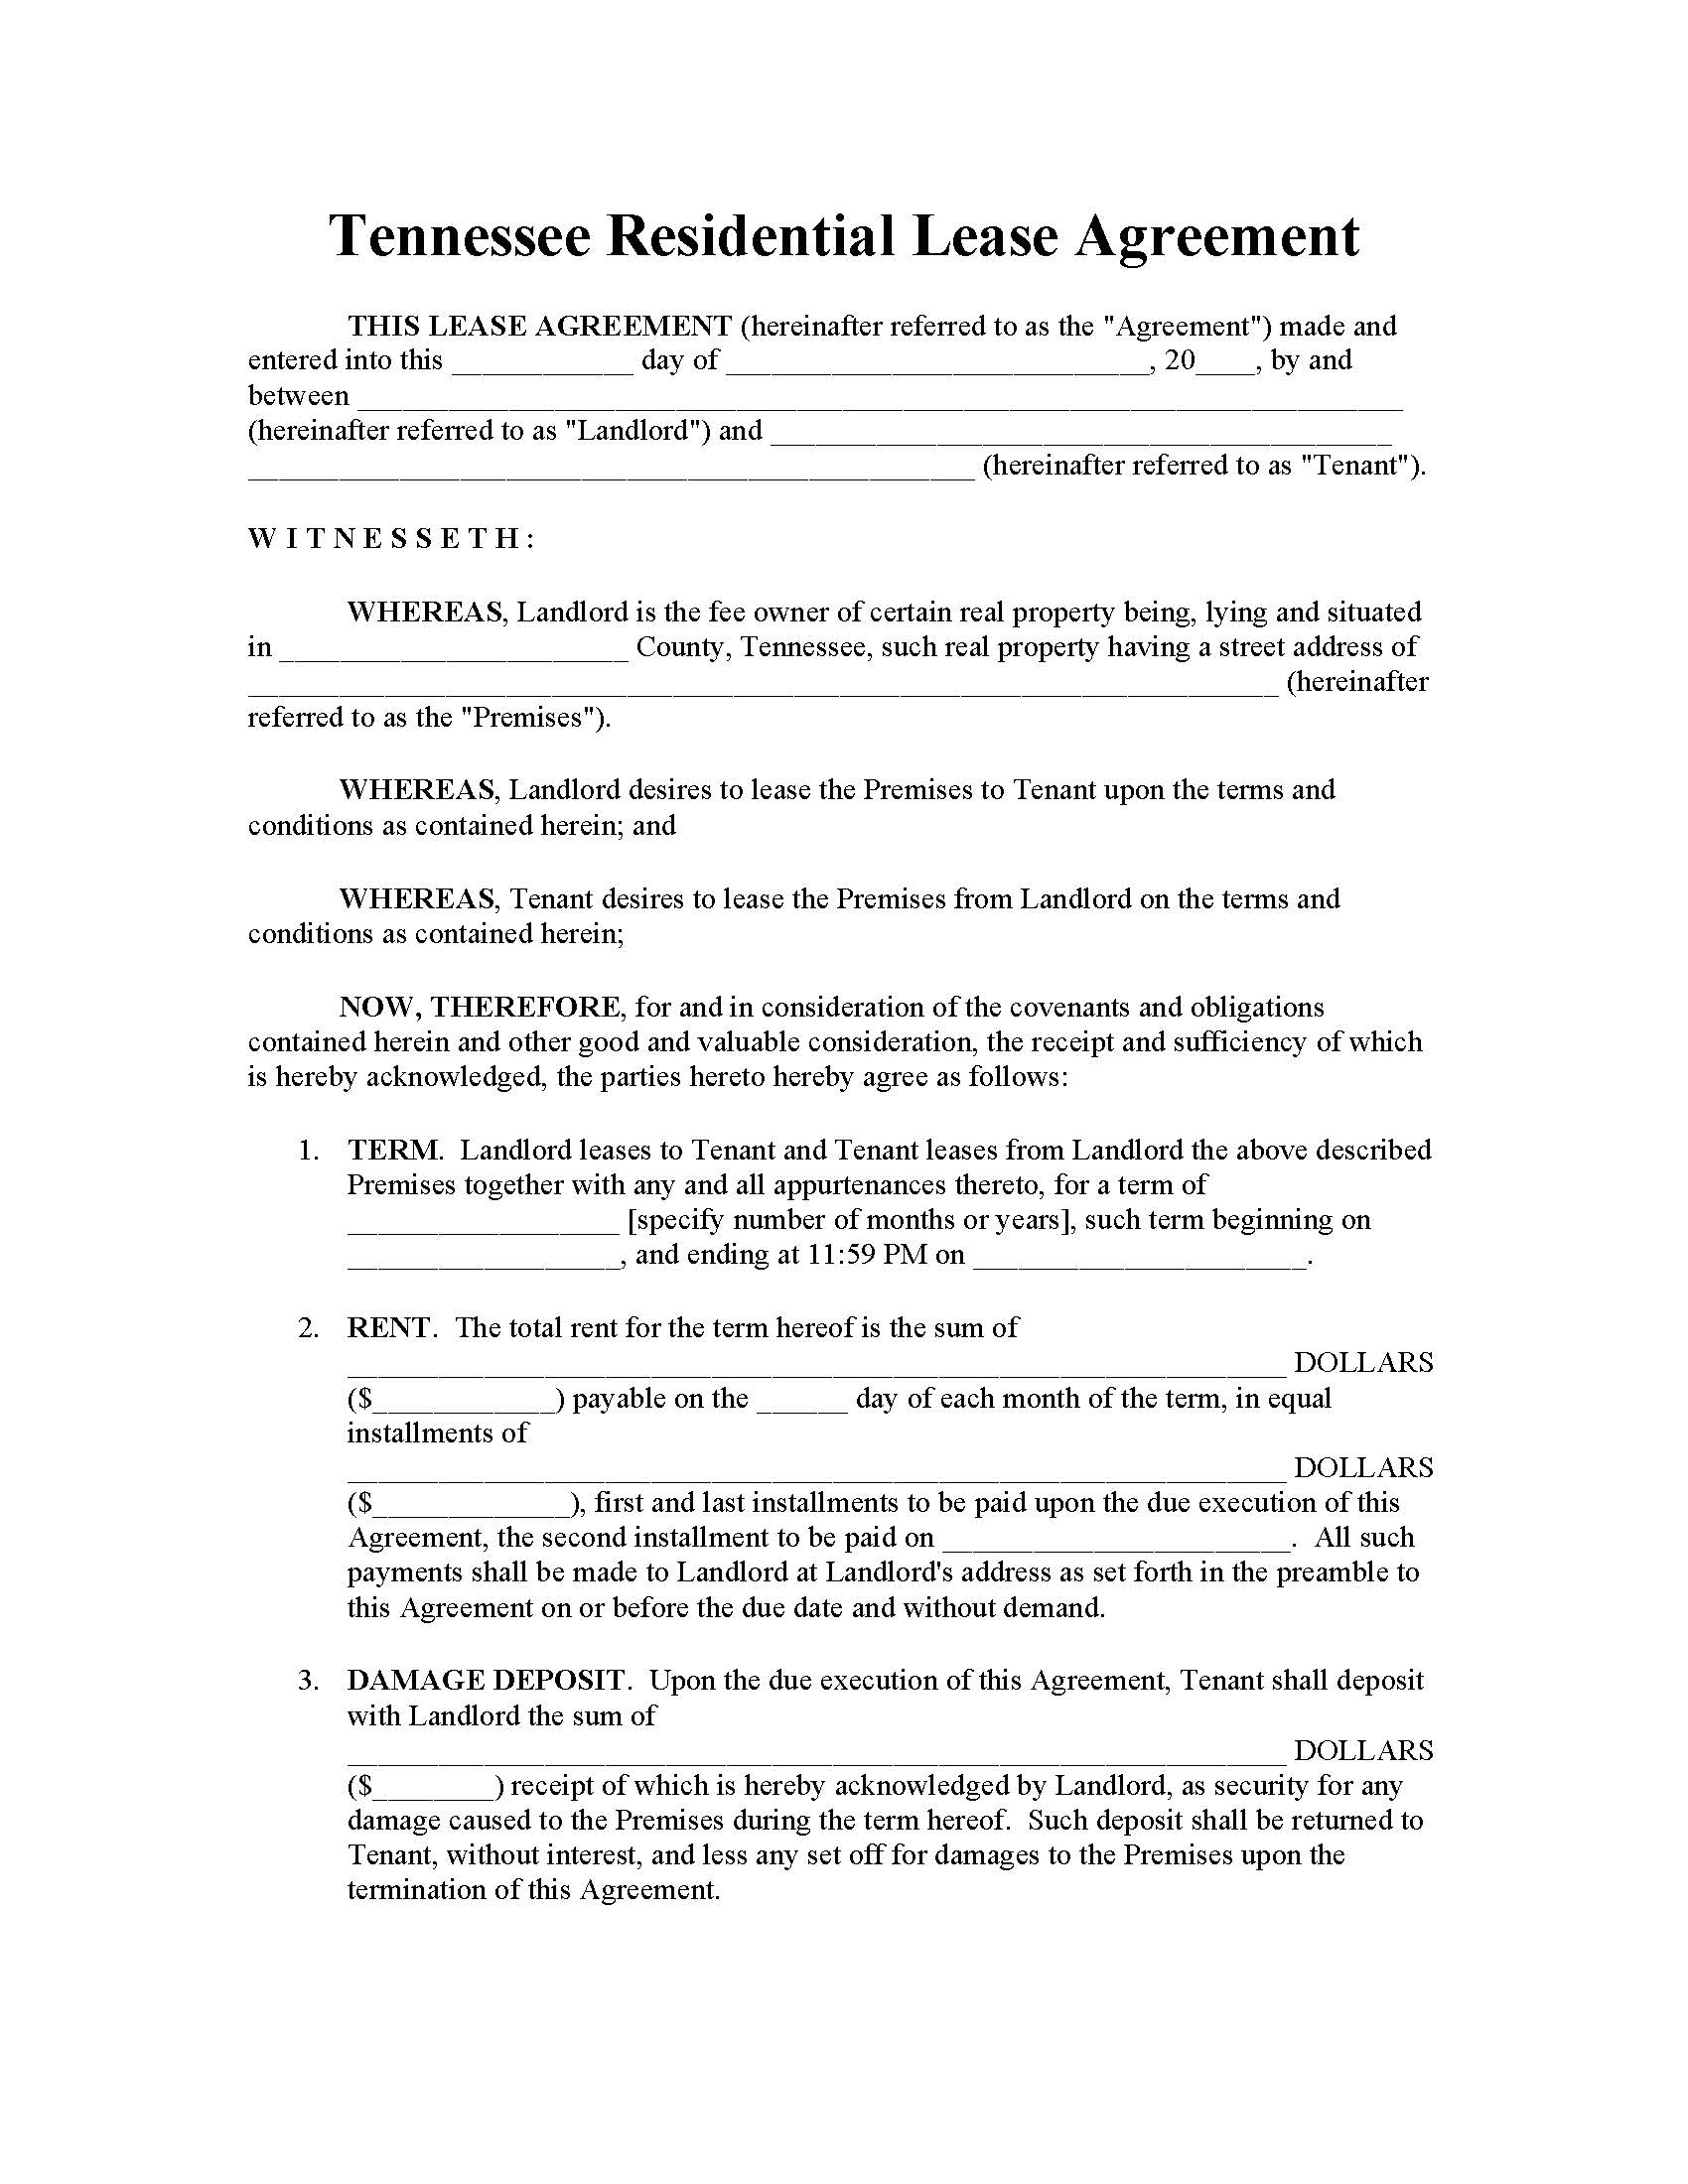 printable-lease-agreement-template-for-tenn-printable-form-templates